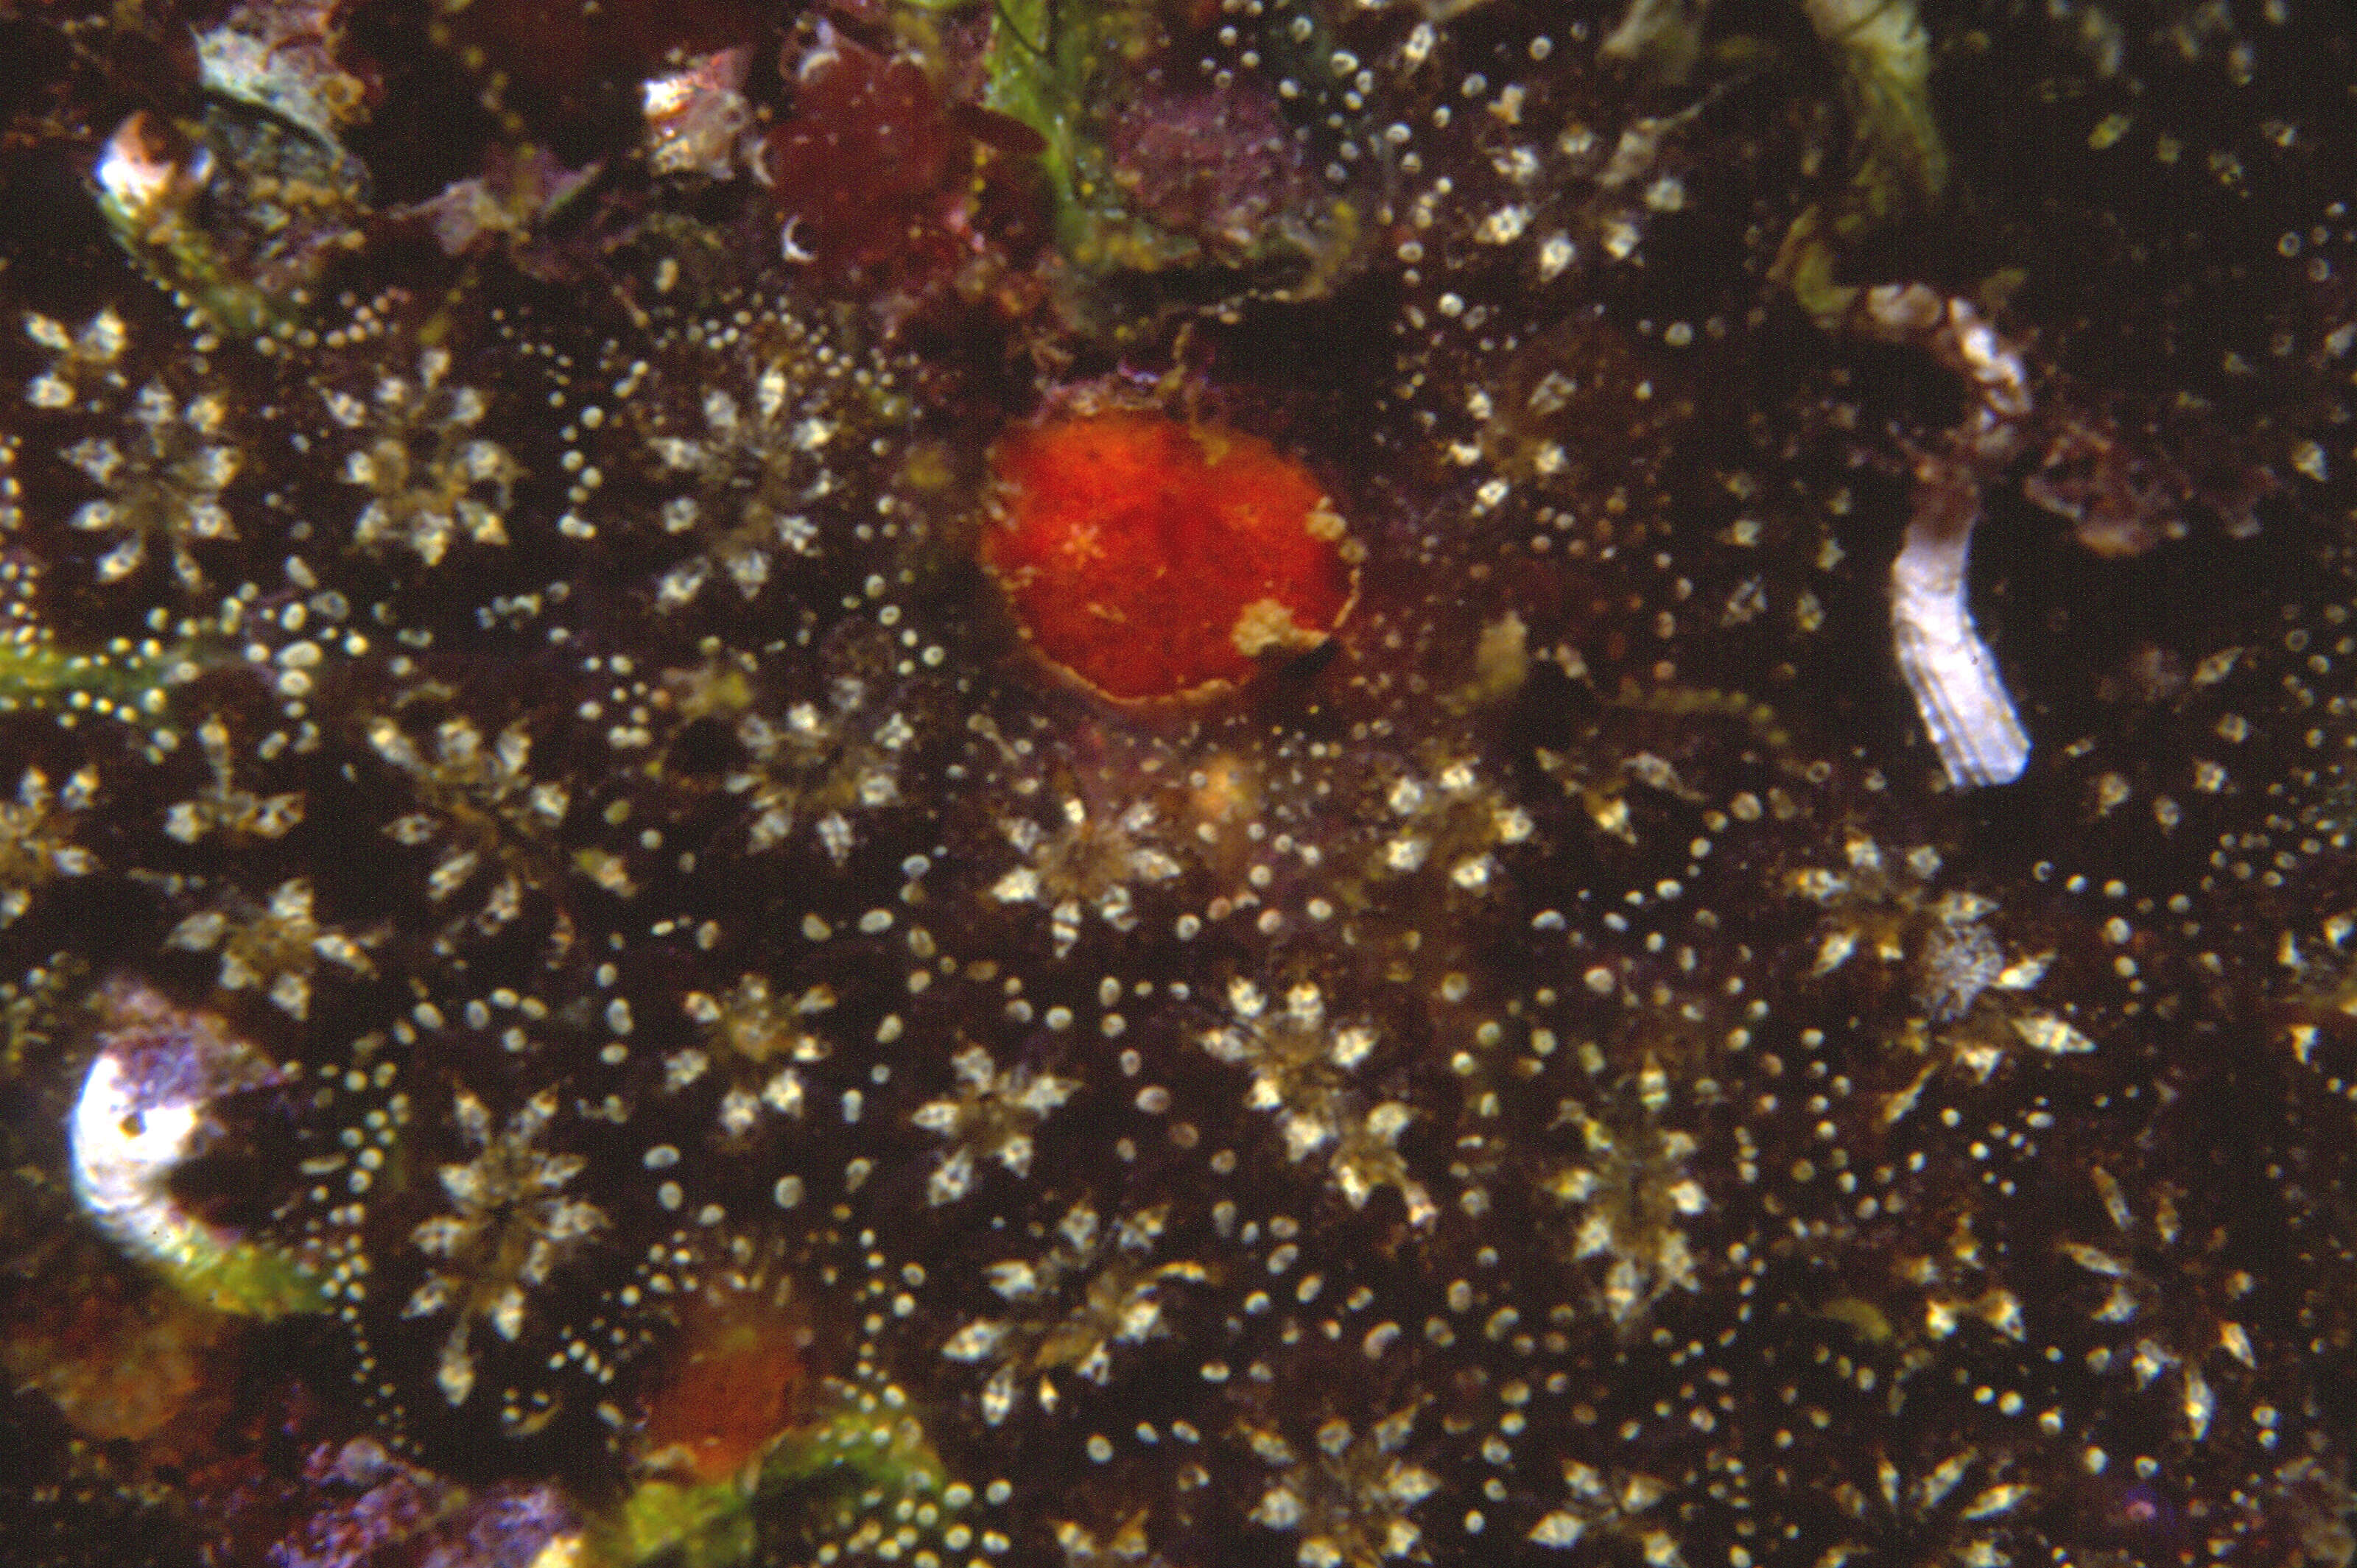 Image of Star ascidian